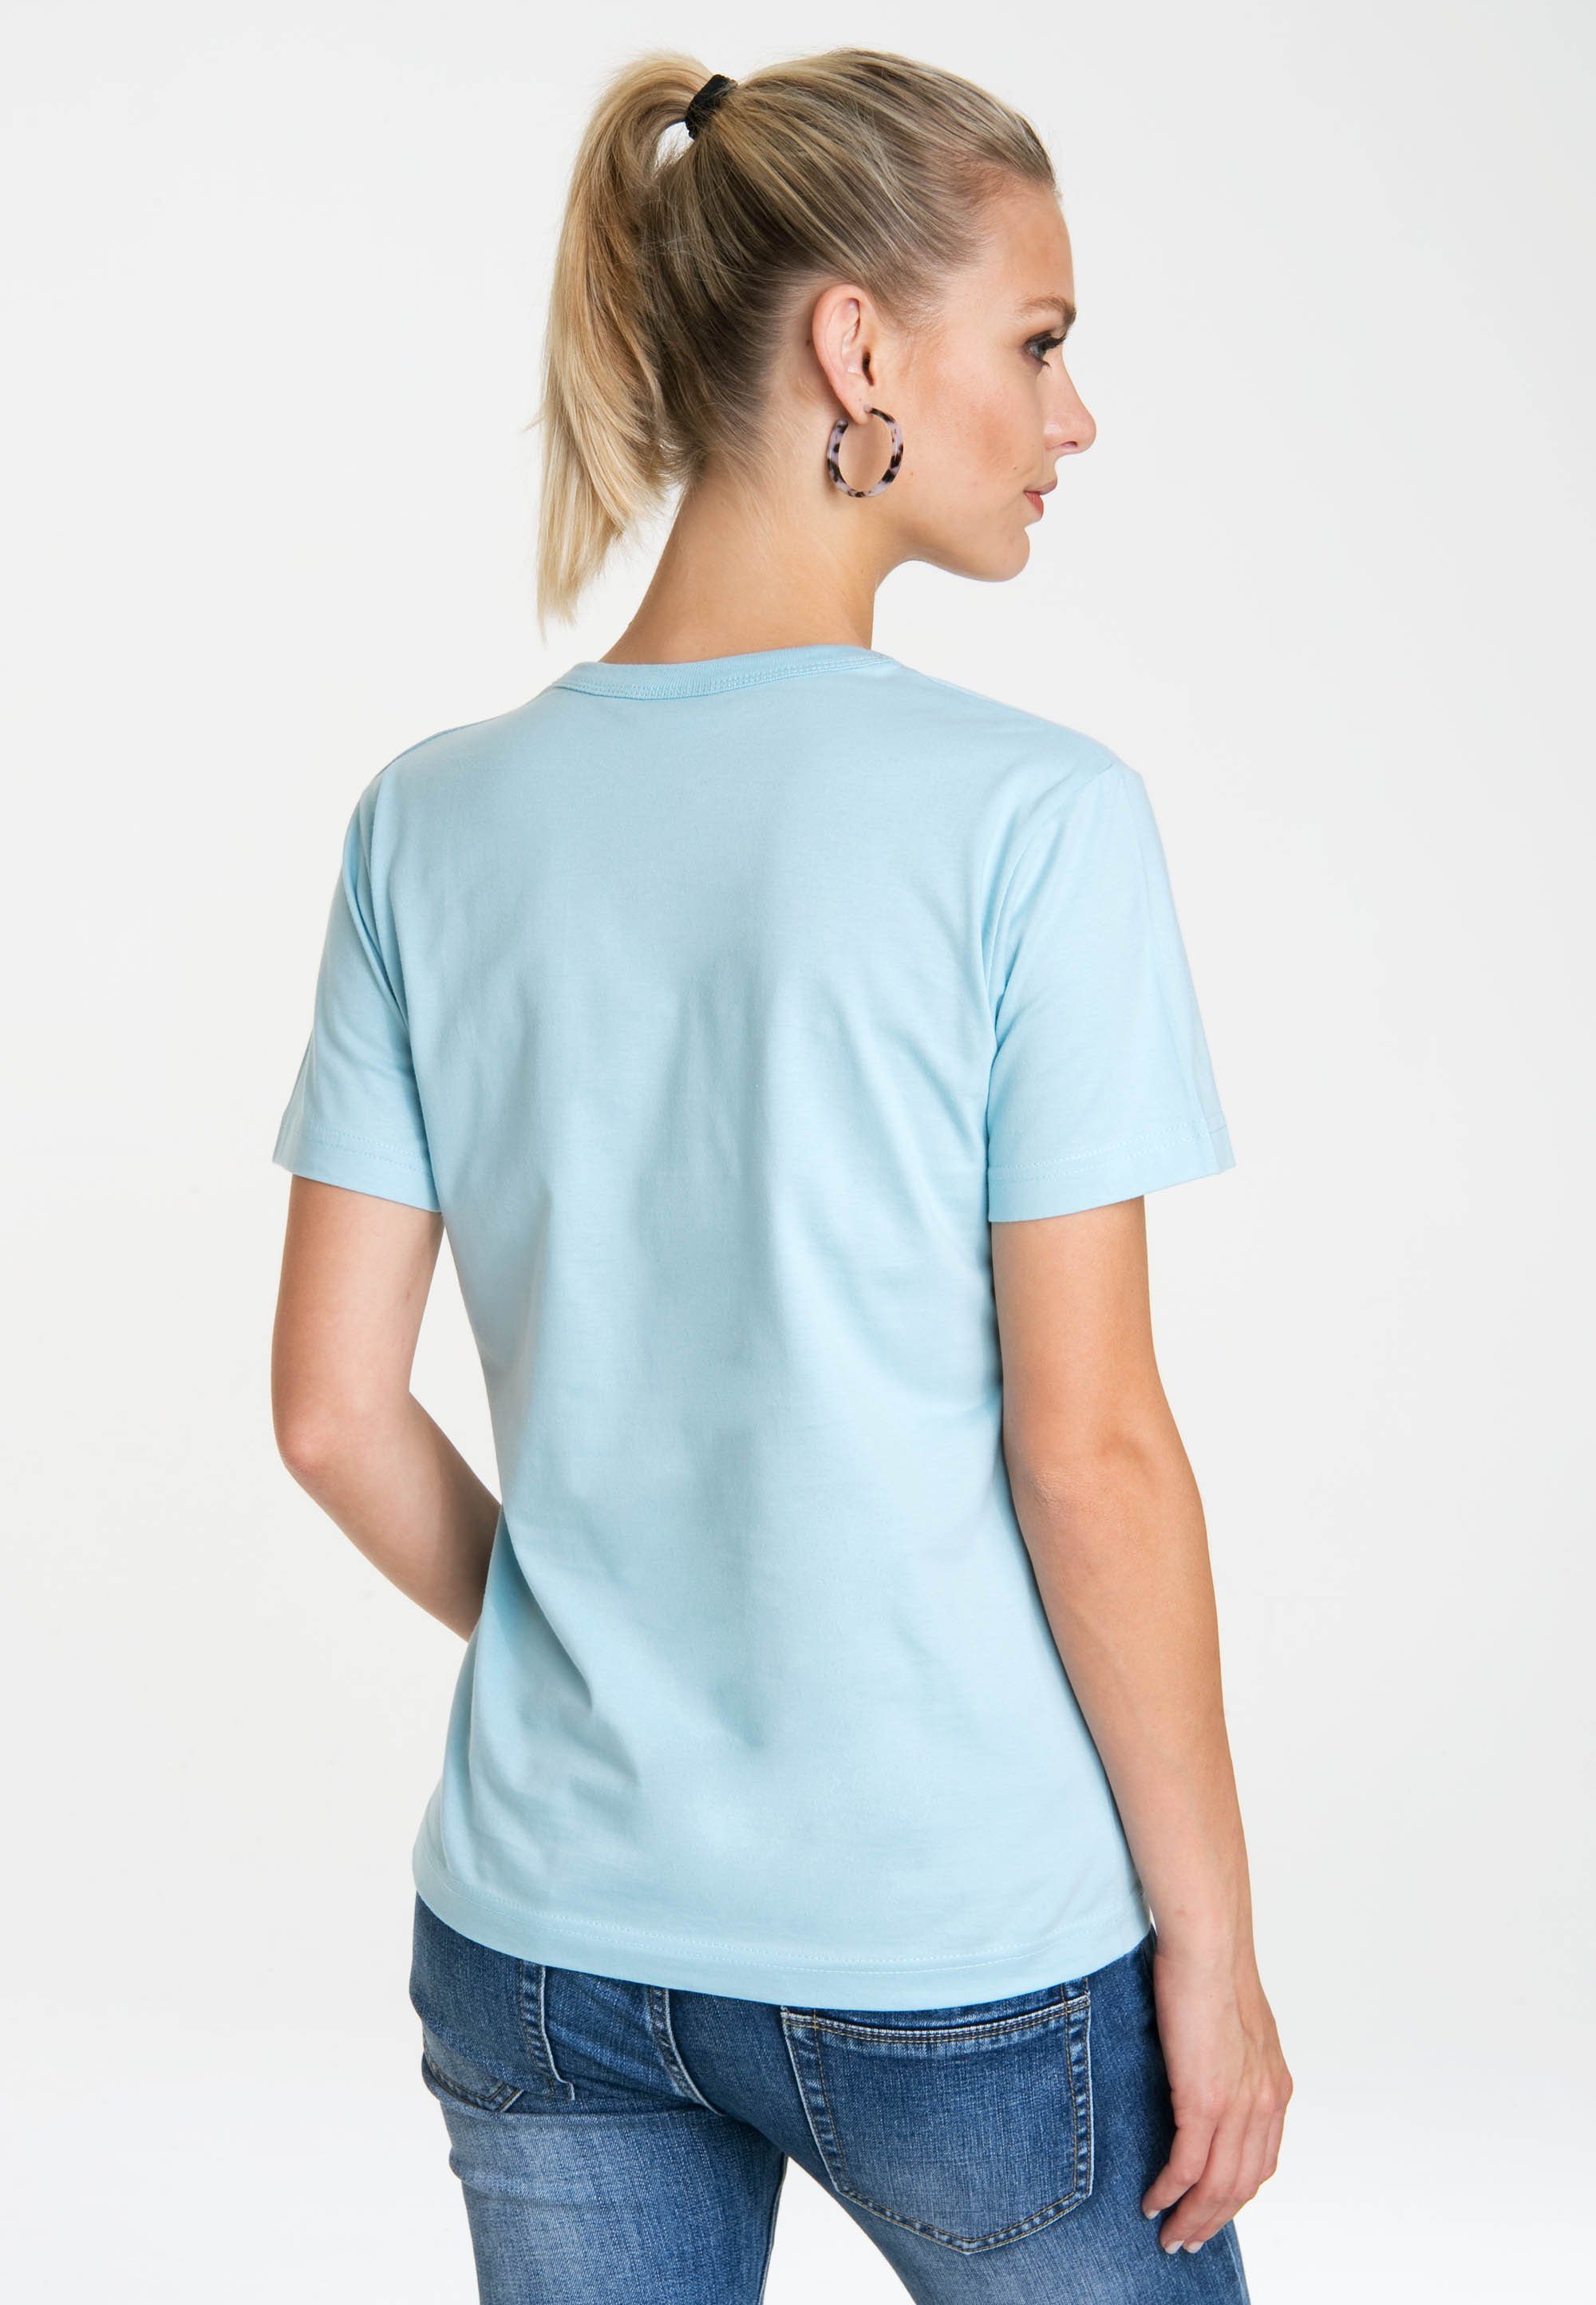 hellblau T-Shirt - lizenziertem Sesamstrasse mit Originalddesign LOGOSHIRT Krümelmonster